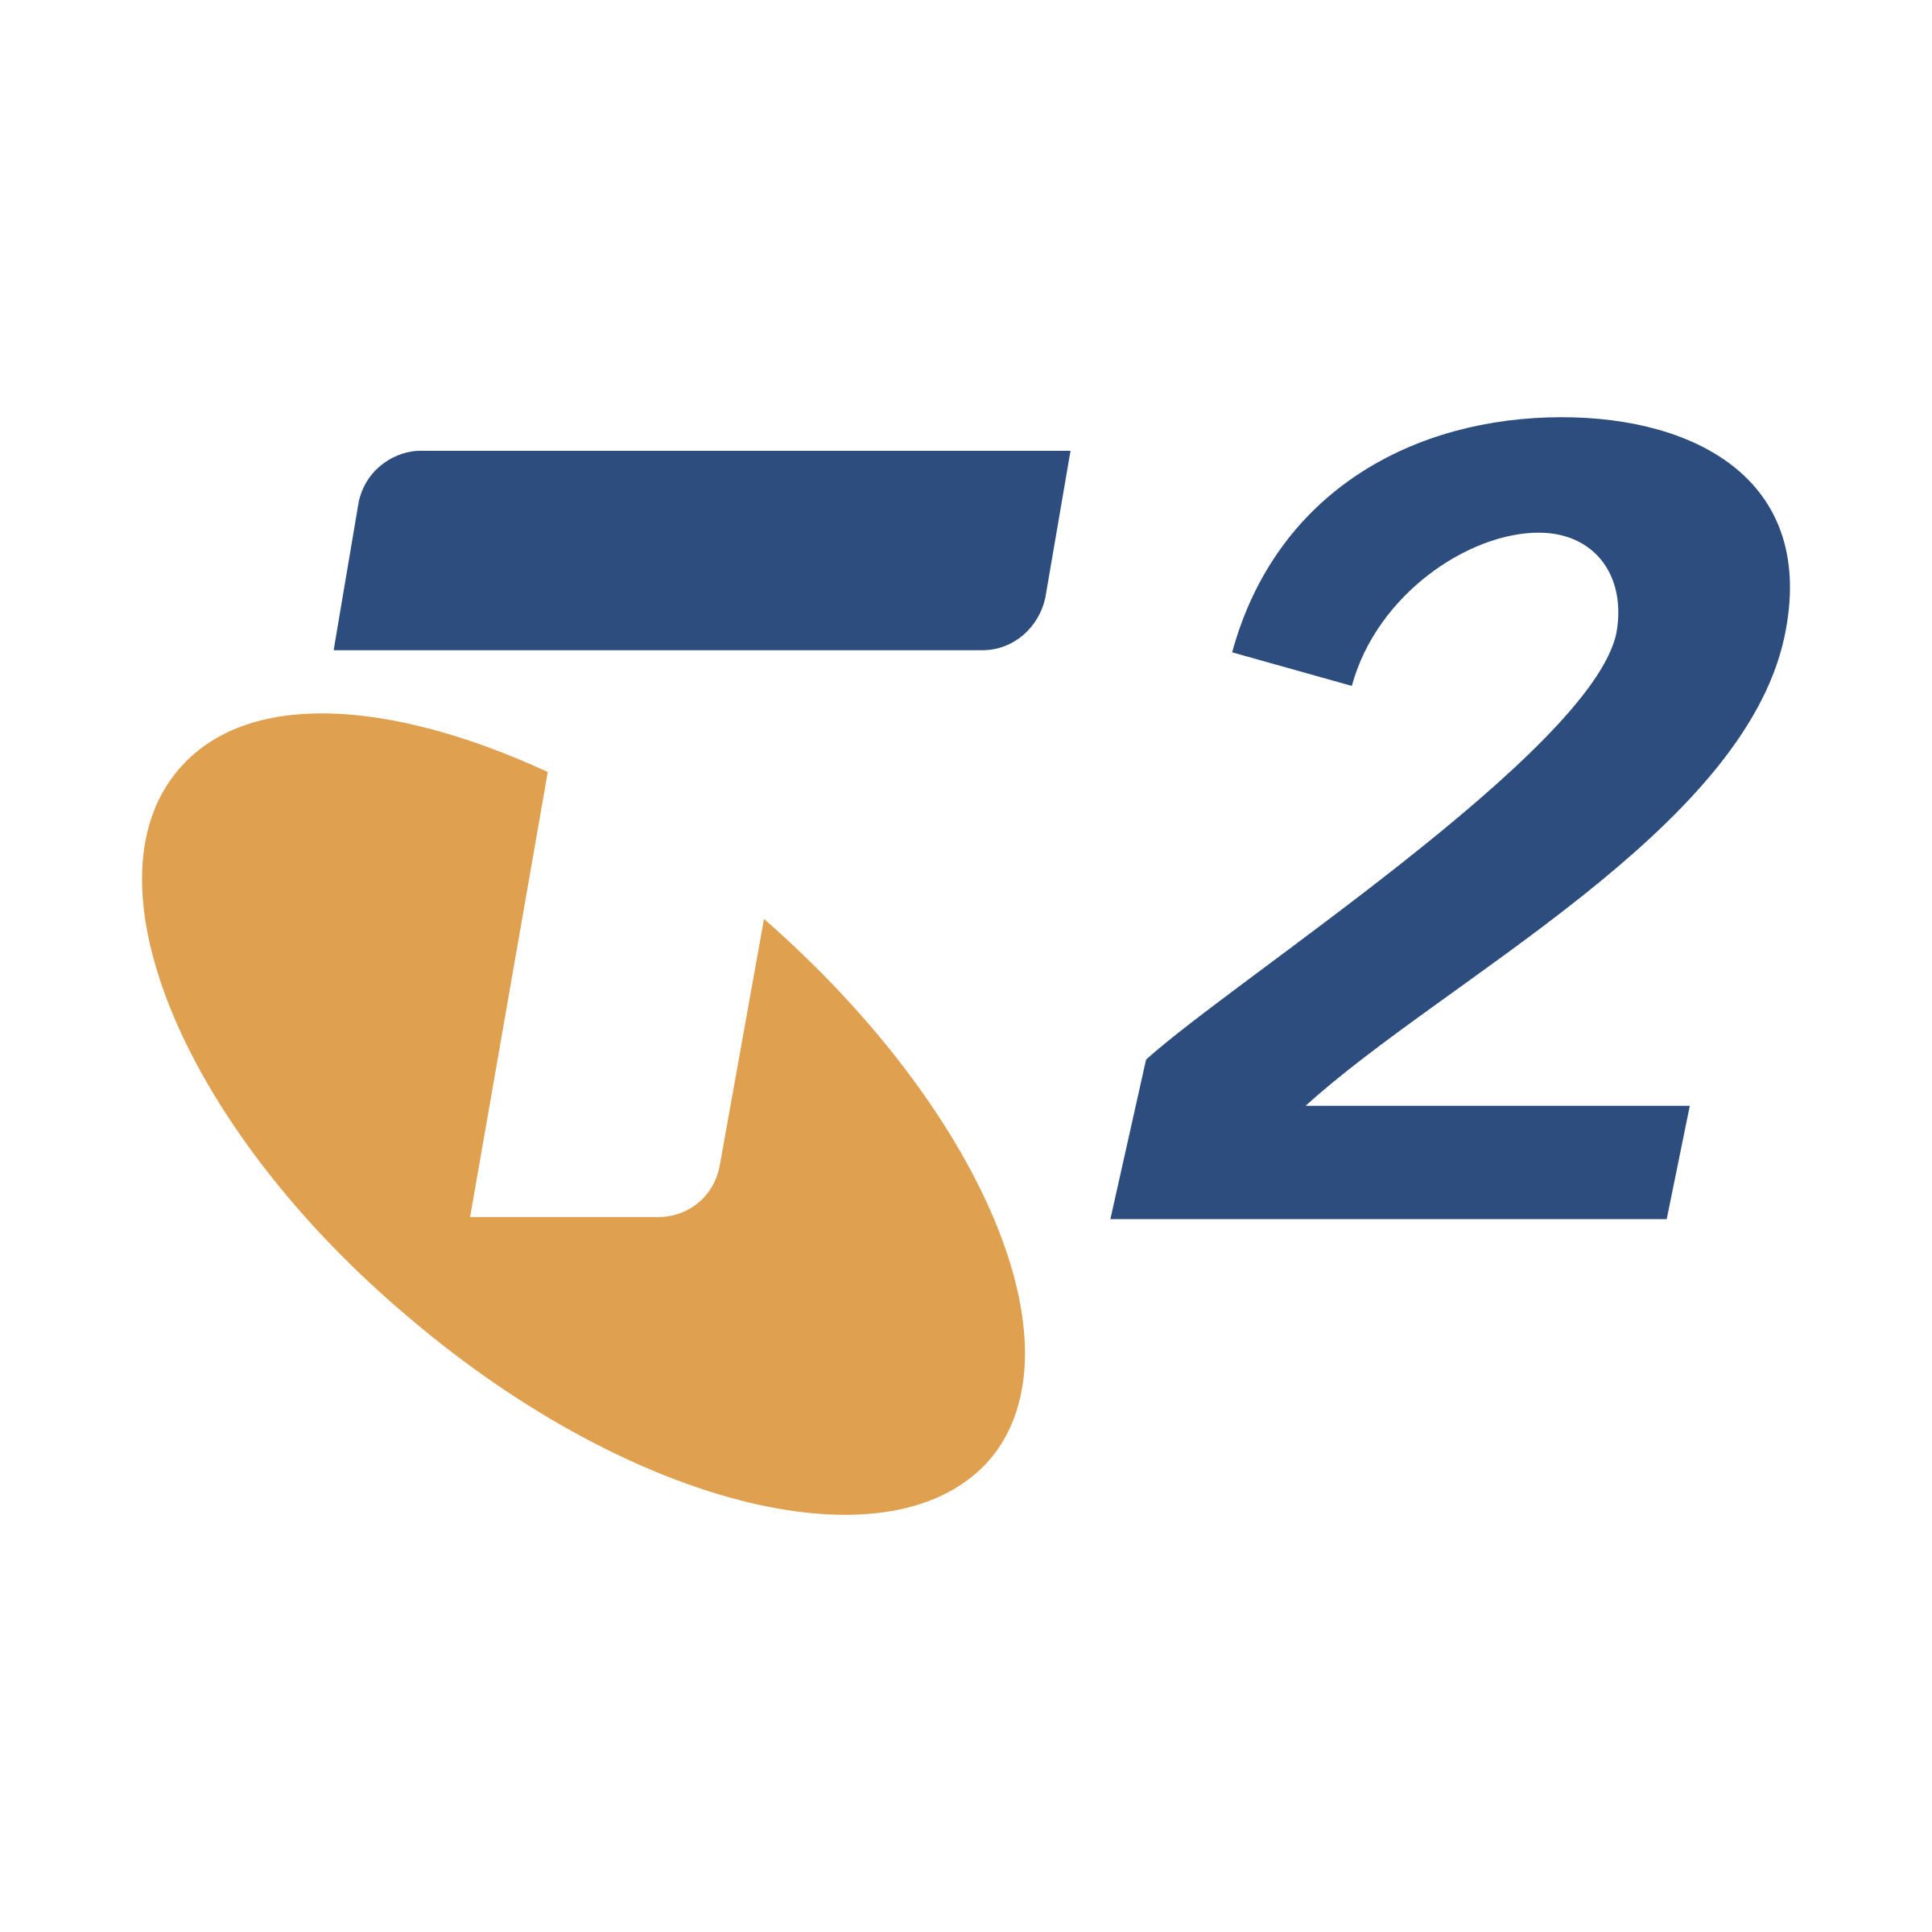 T2 Logo - T2 Logo PNG Transparent & SVG Vector